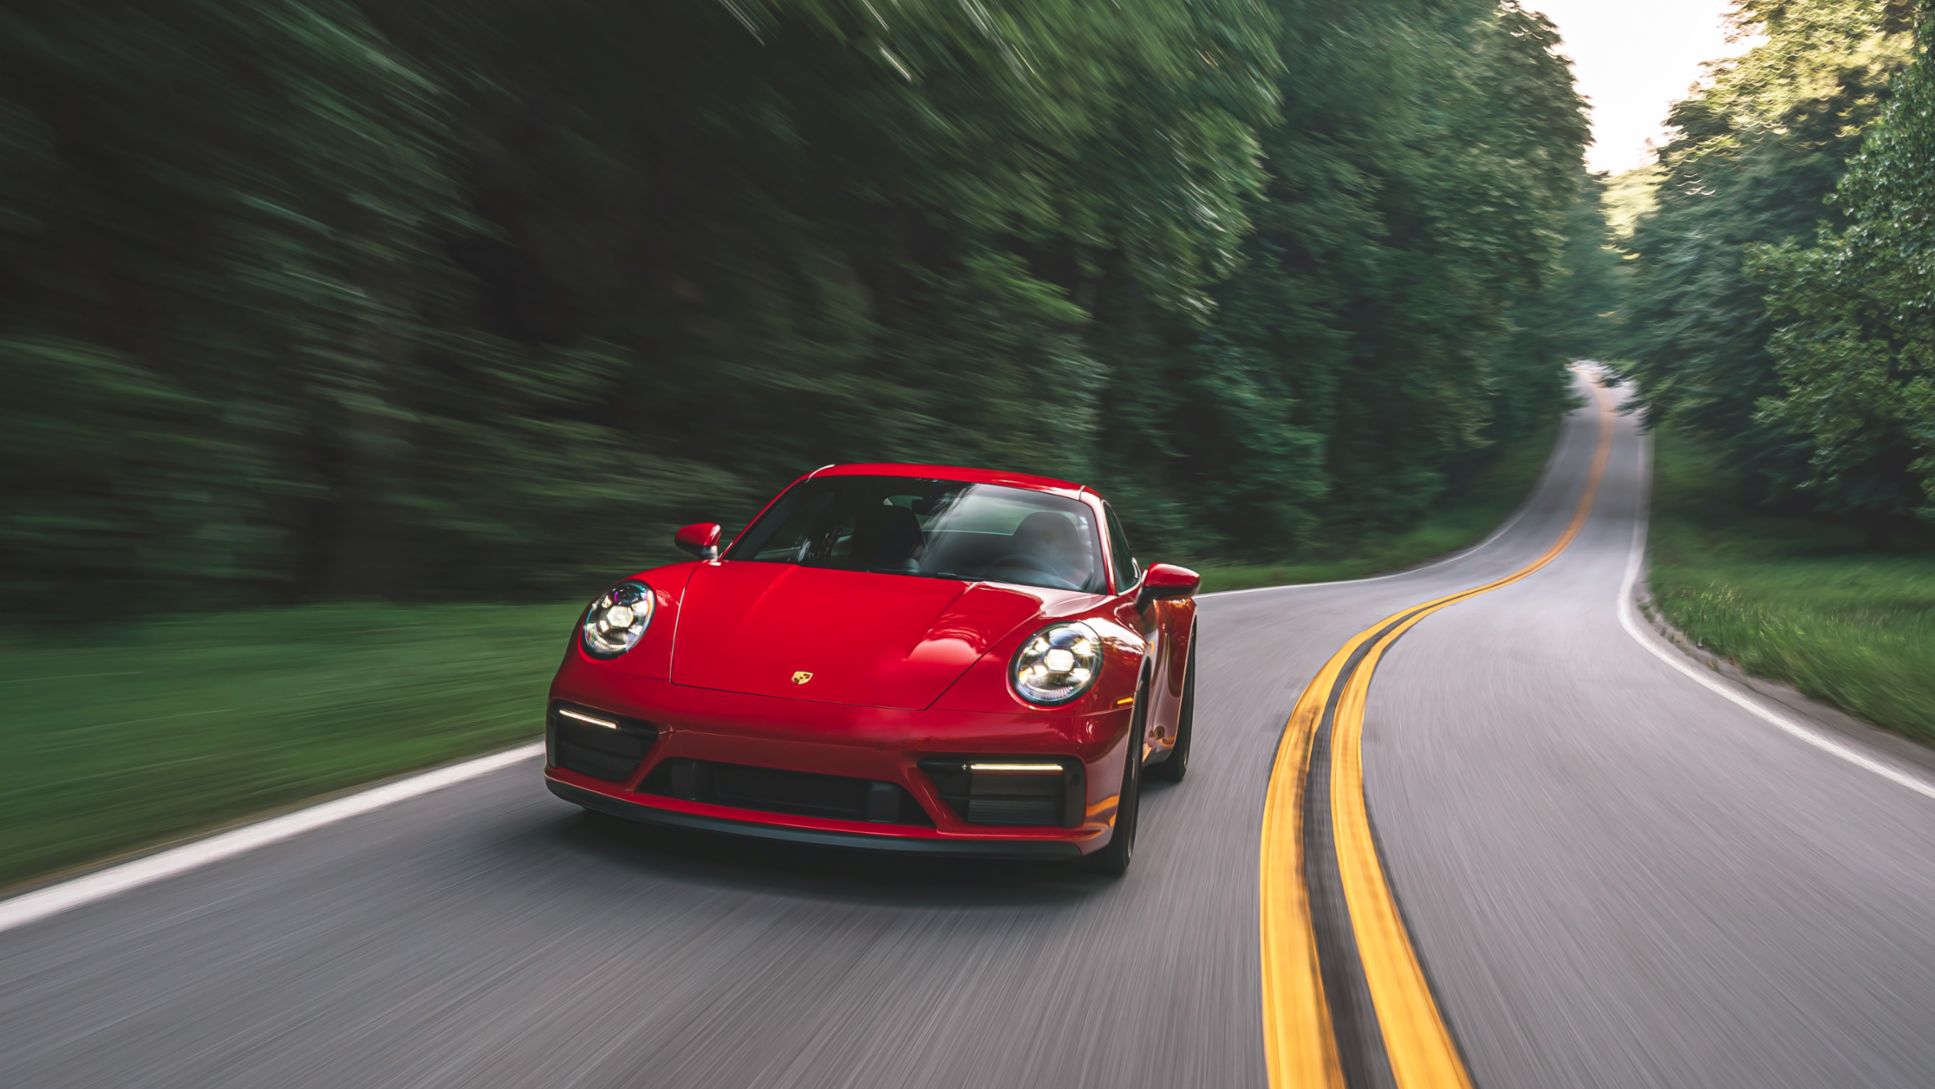 Porsche reports U.S. retail sales for 2021 - Porsche Newsroom USA